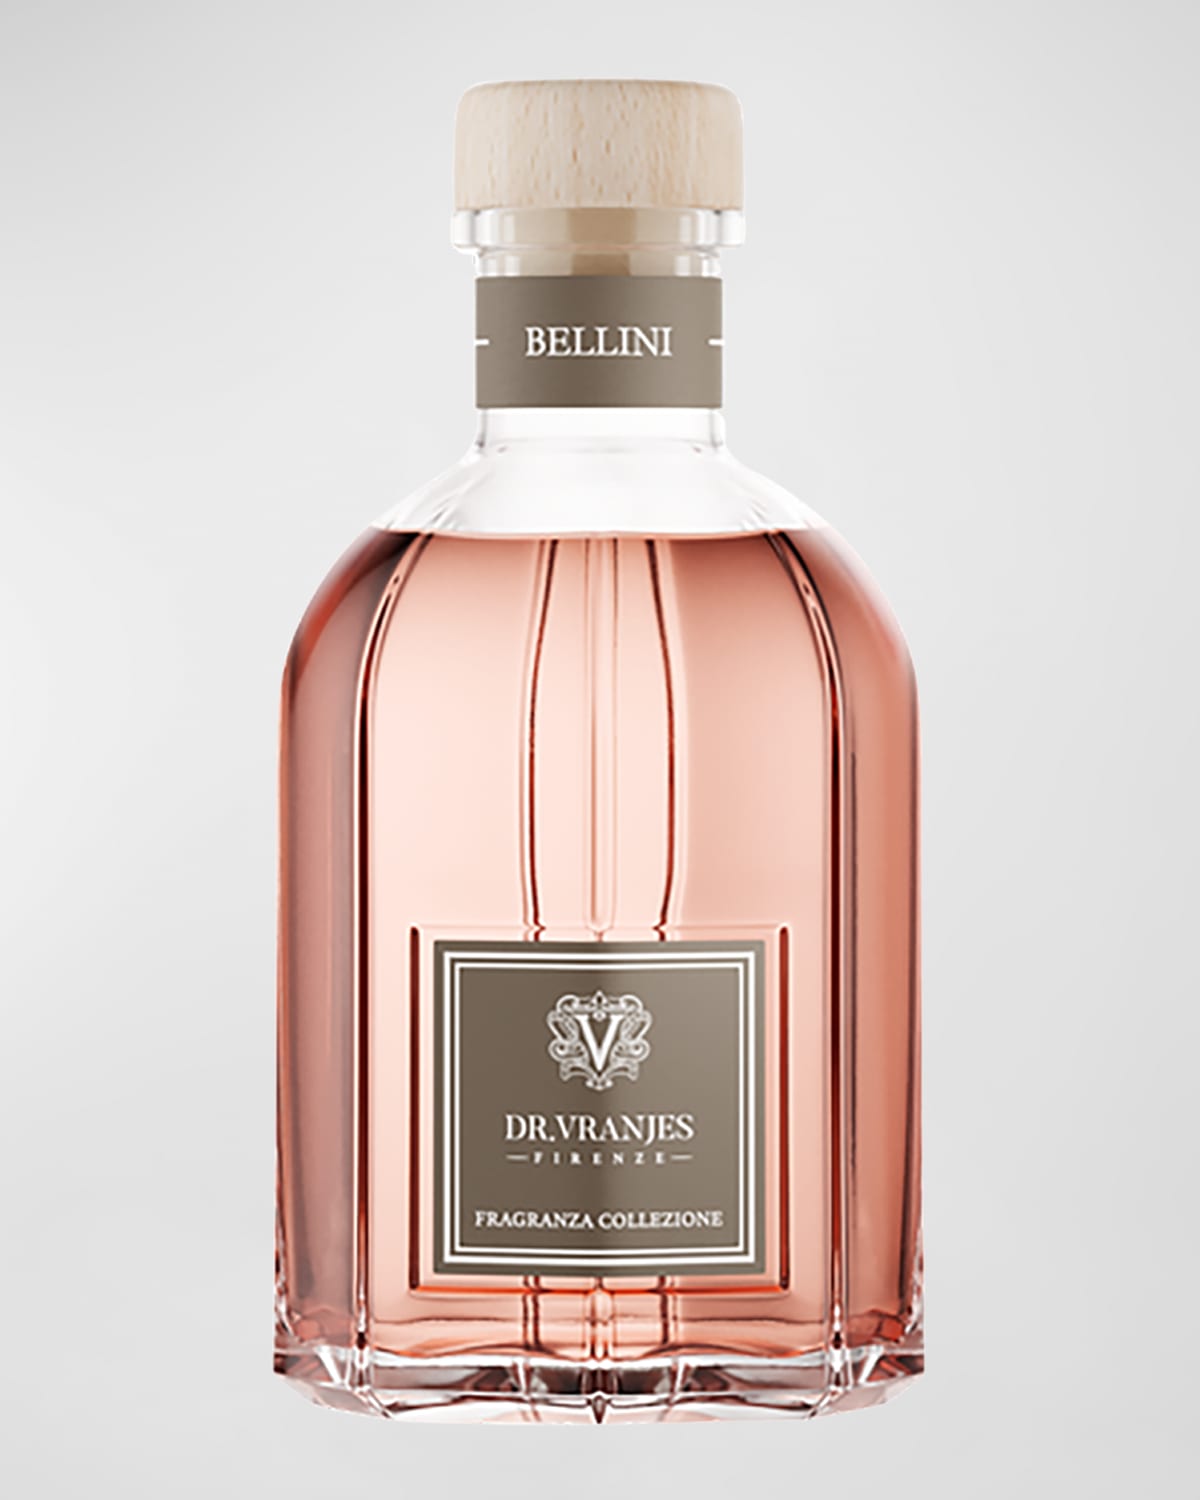 Dr Vranjes Firenze 17 Oz. Bellini Glass Bottle Collection Fragrance